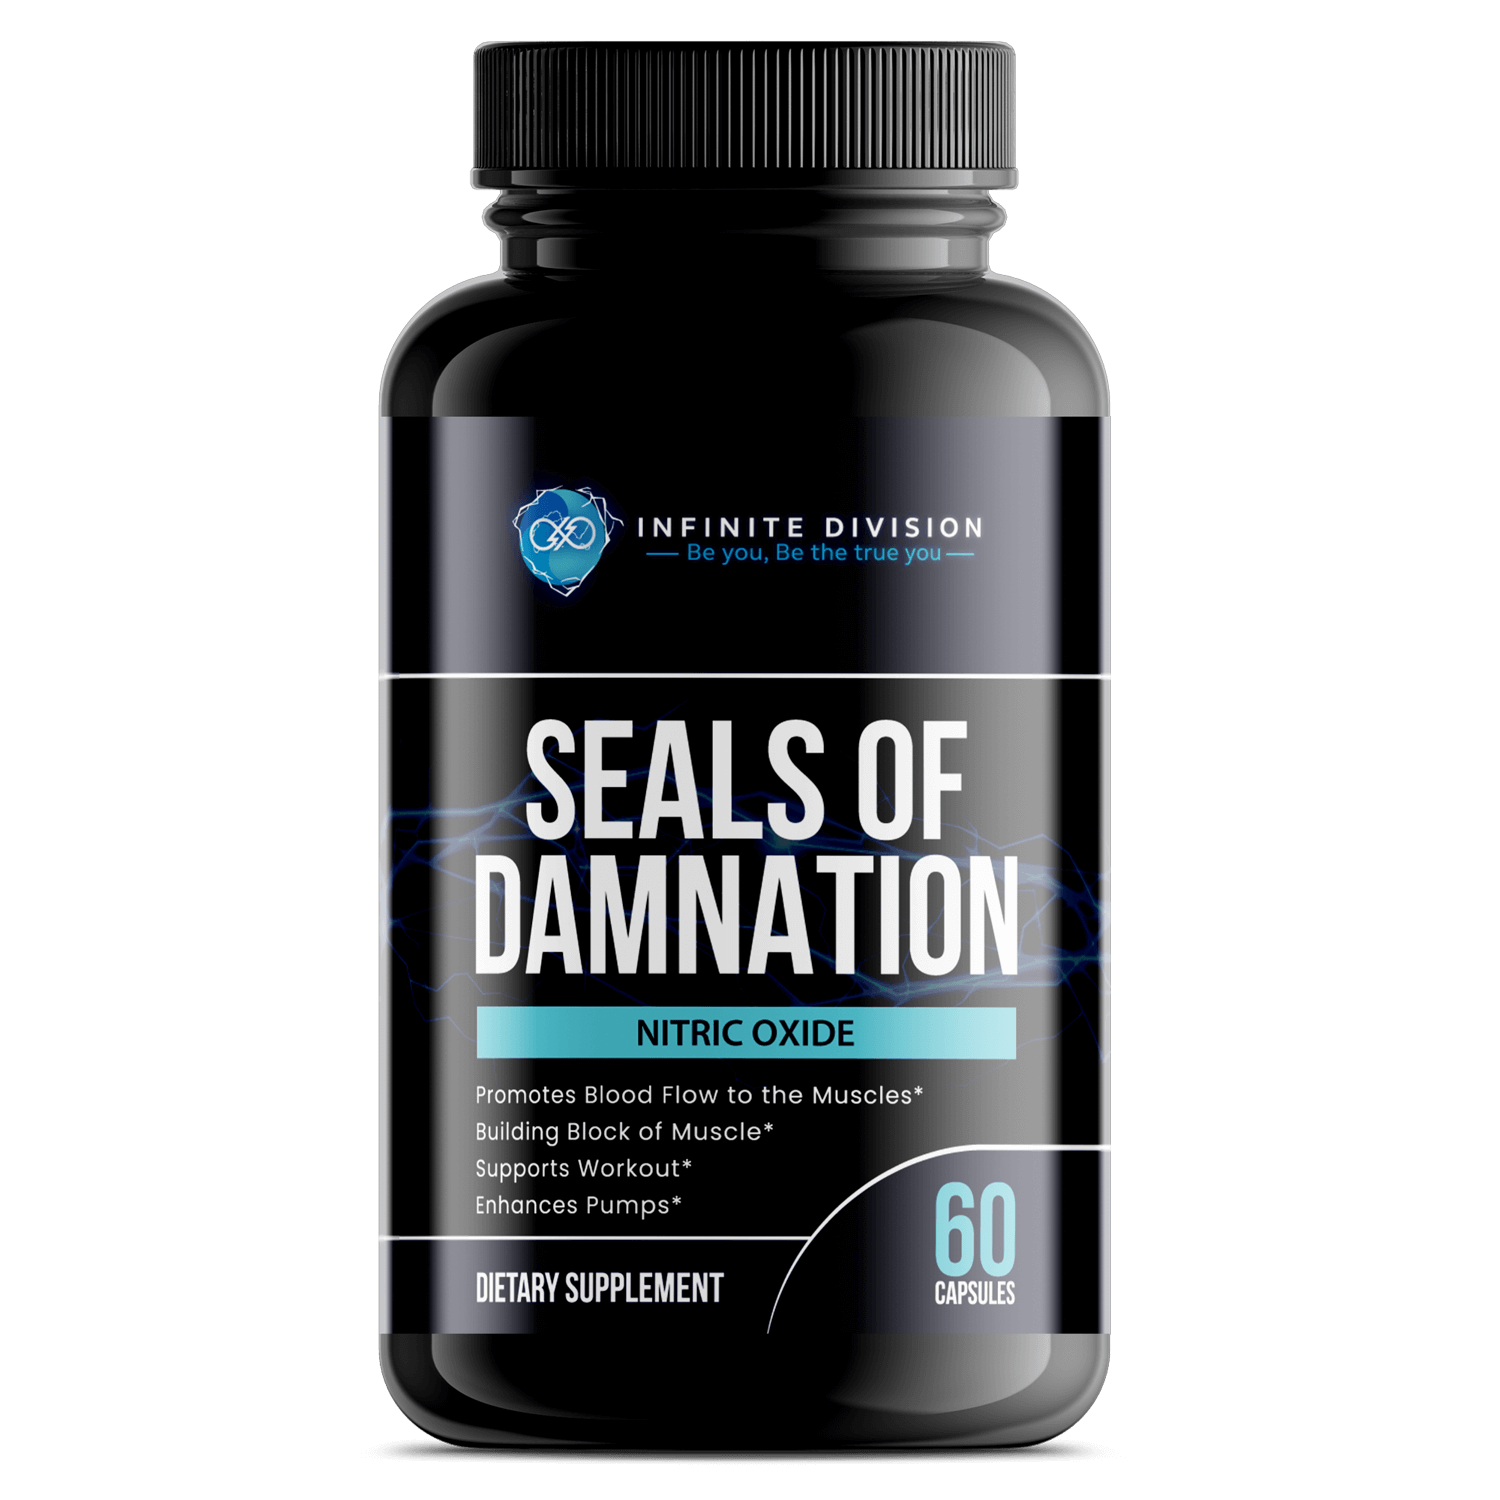 Seal of Damnation